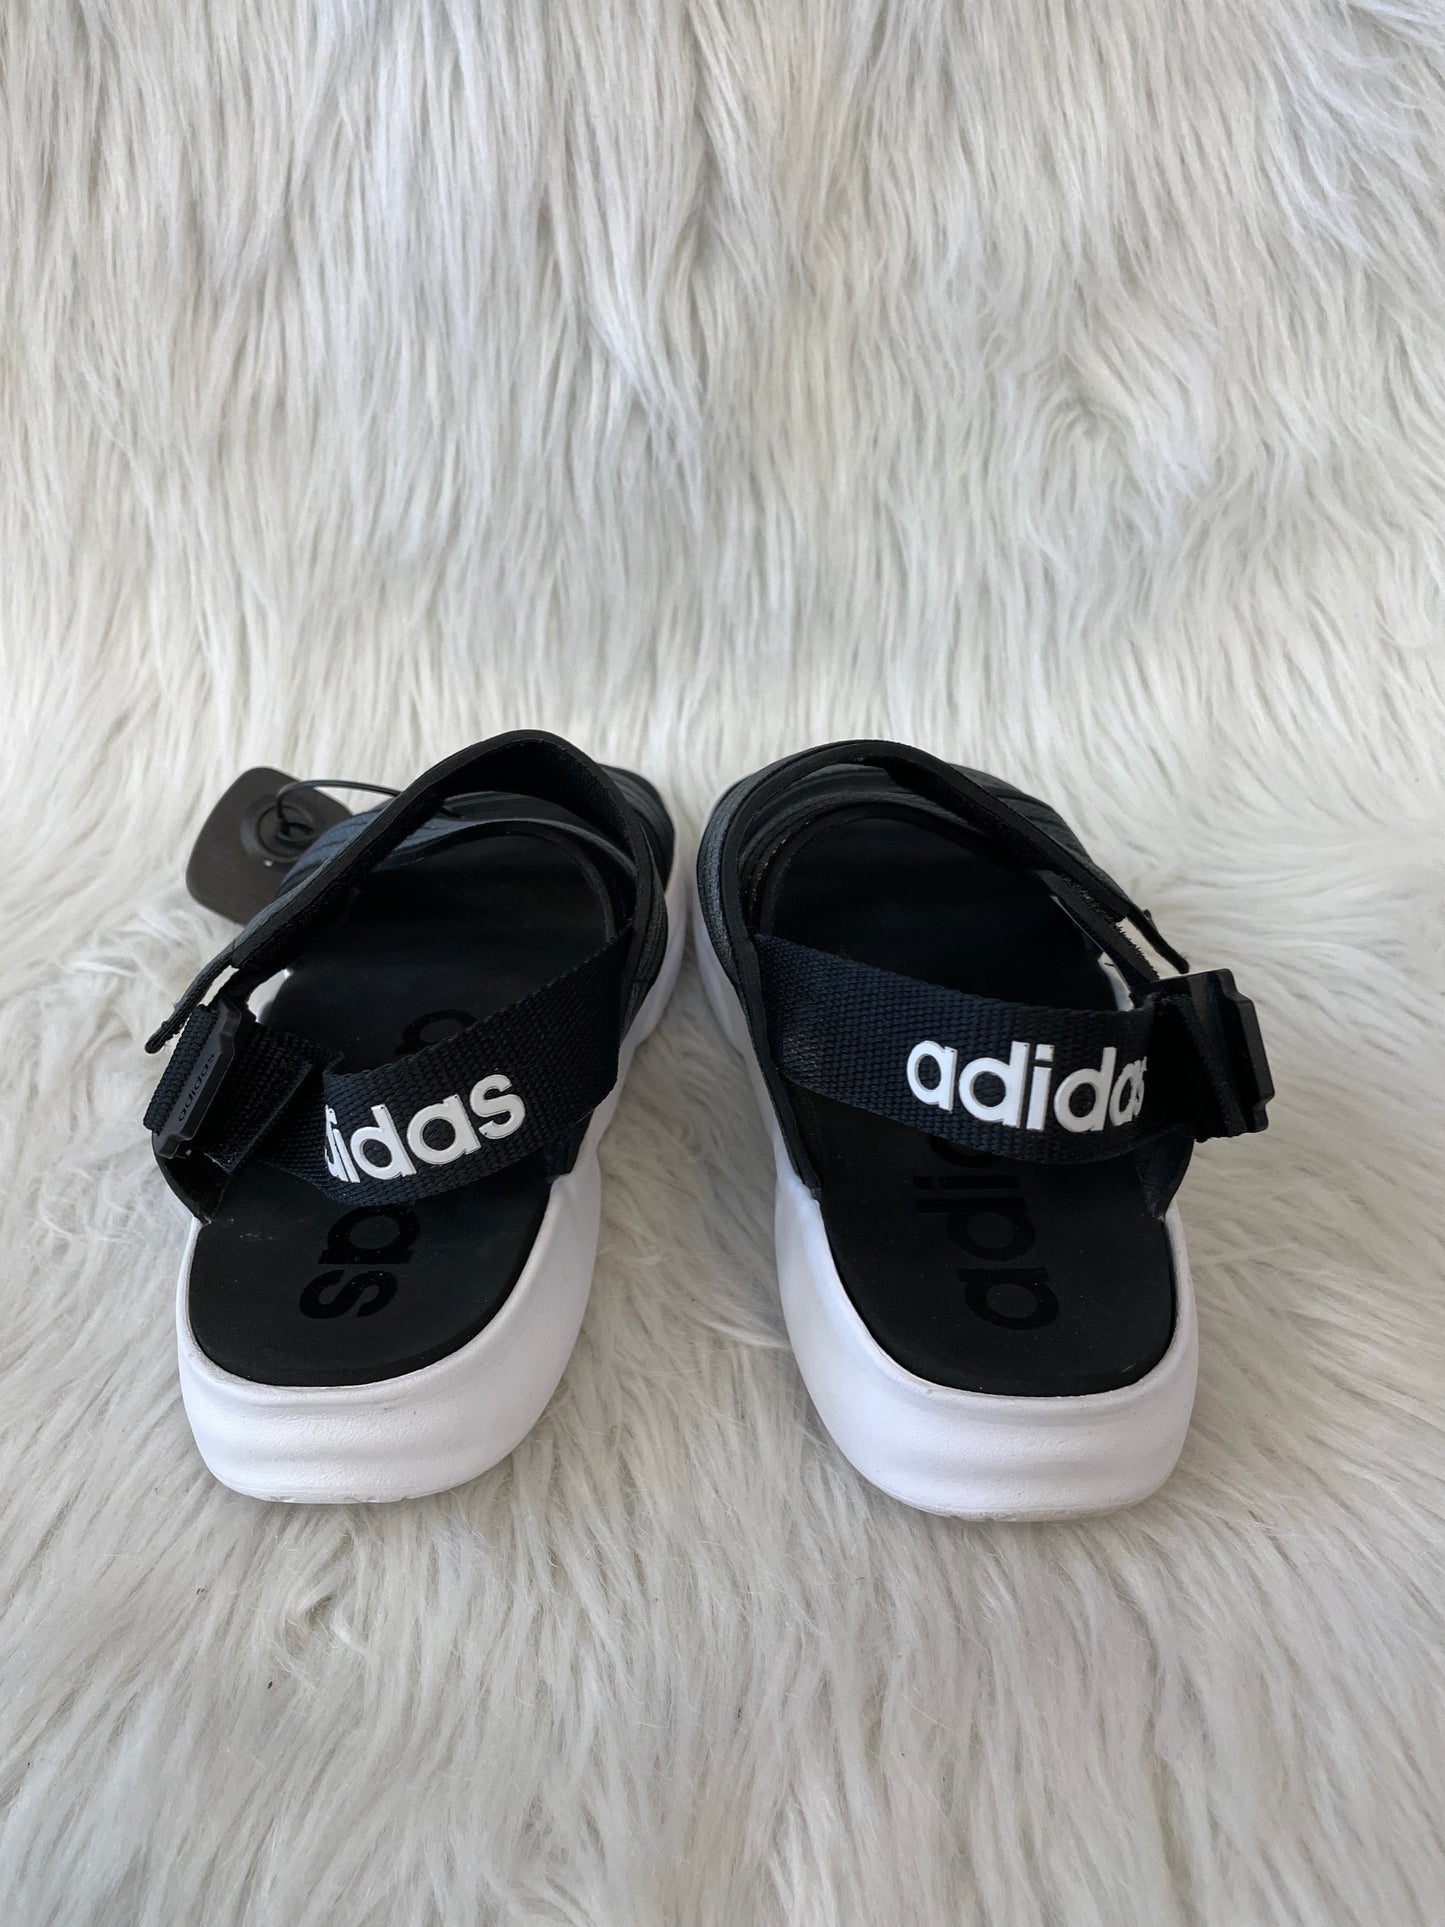 Black & Grey Sandals Sport Adidas, Size 7